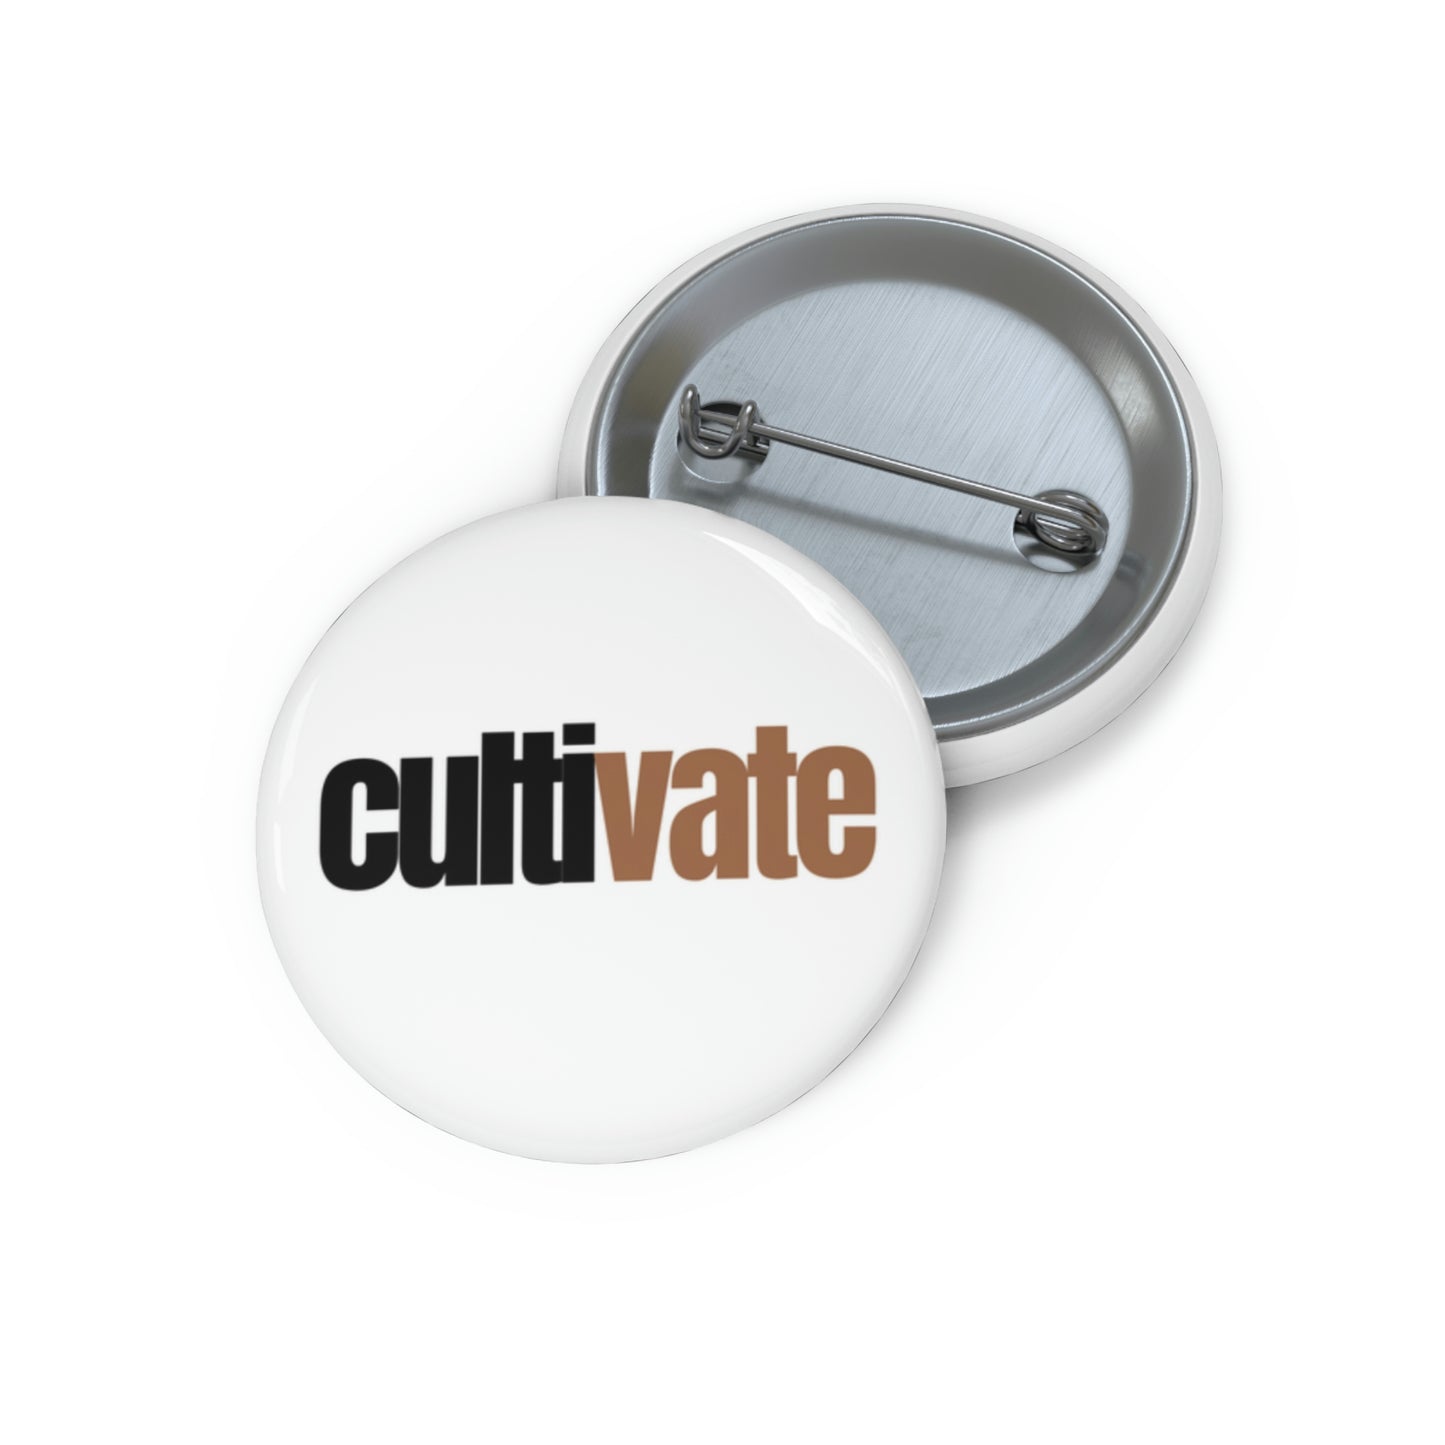 "cultivate" Pin Button - black & gold